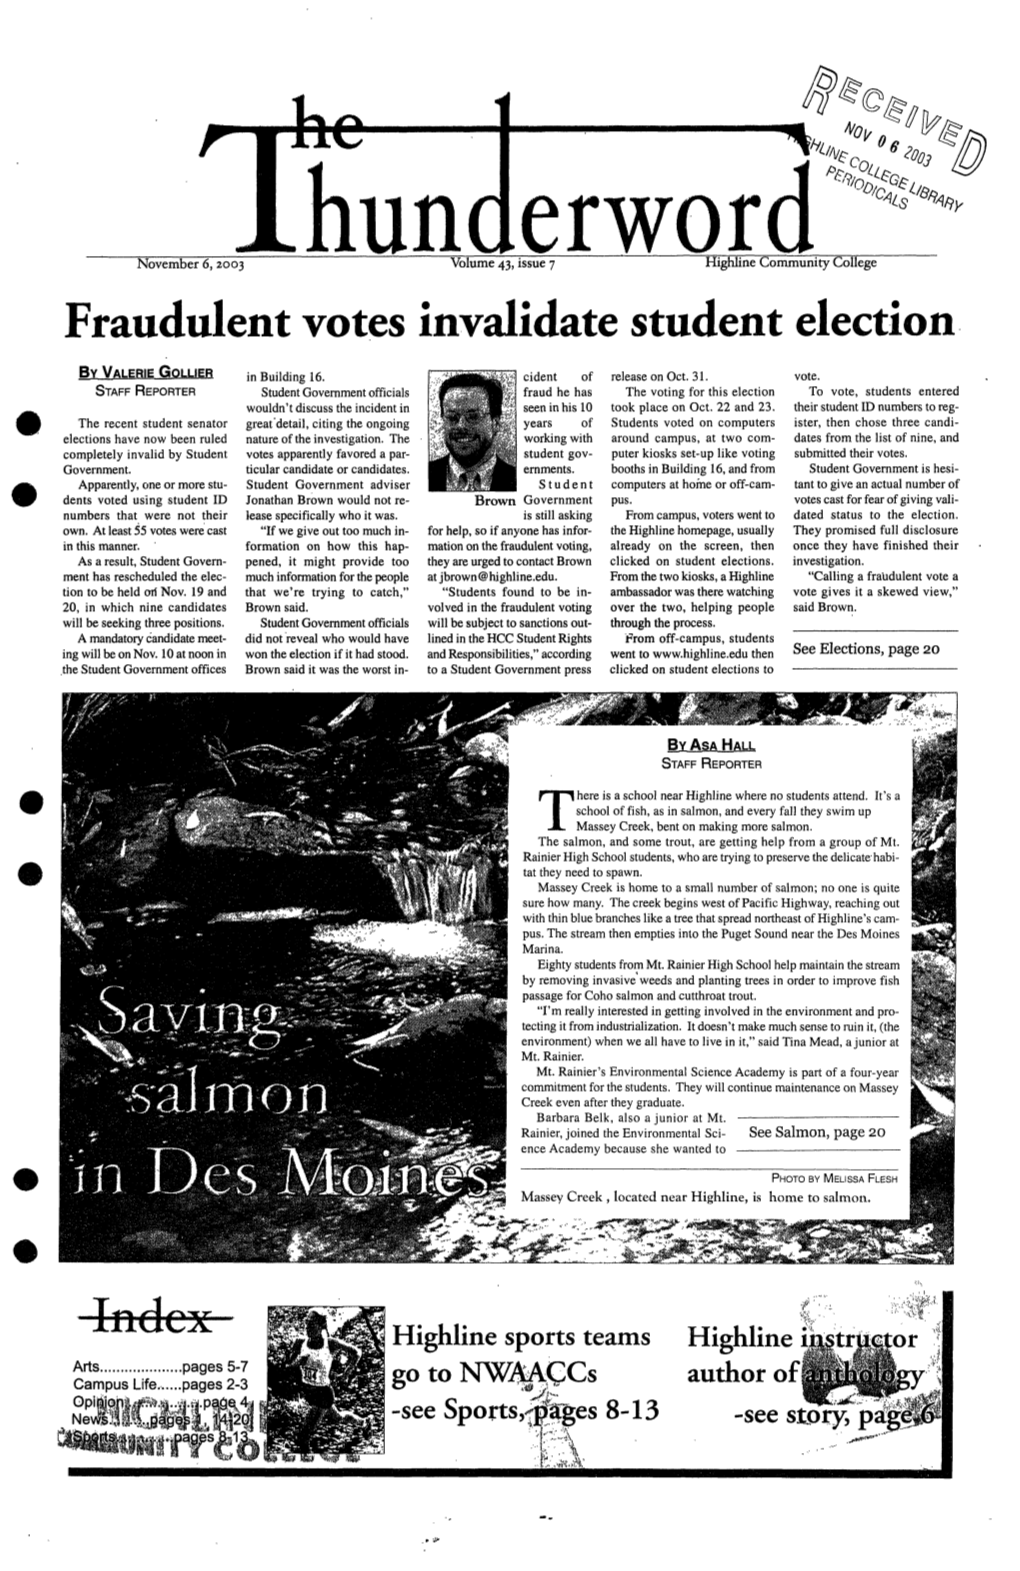 Fraudulent Votes Invalidate Student Election